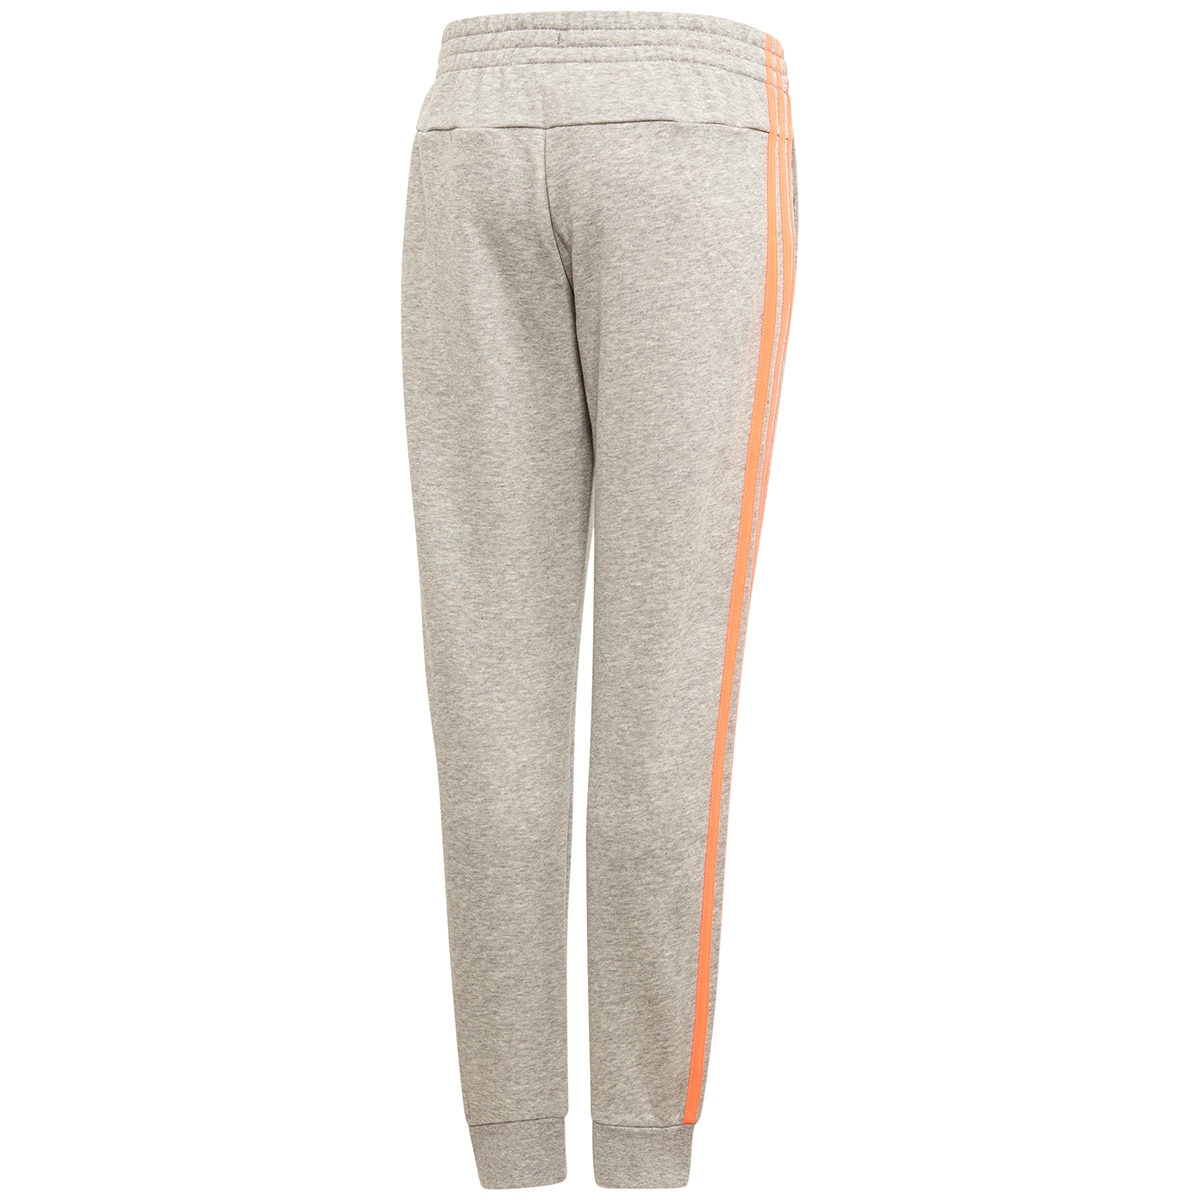 Adidas Girls' 3S Track Pants - Light Grey